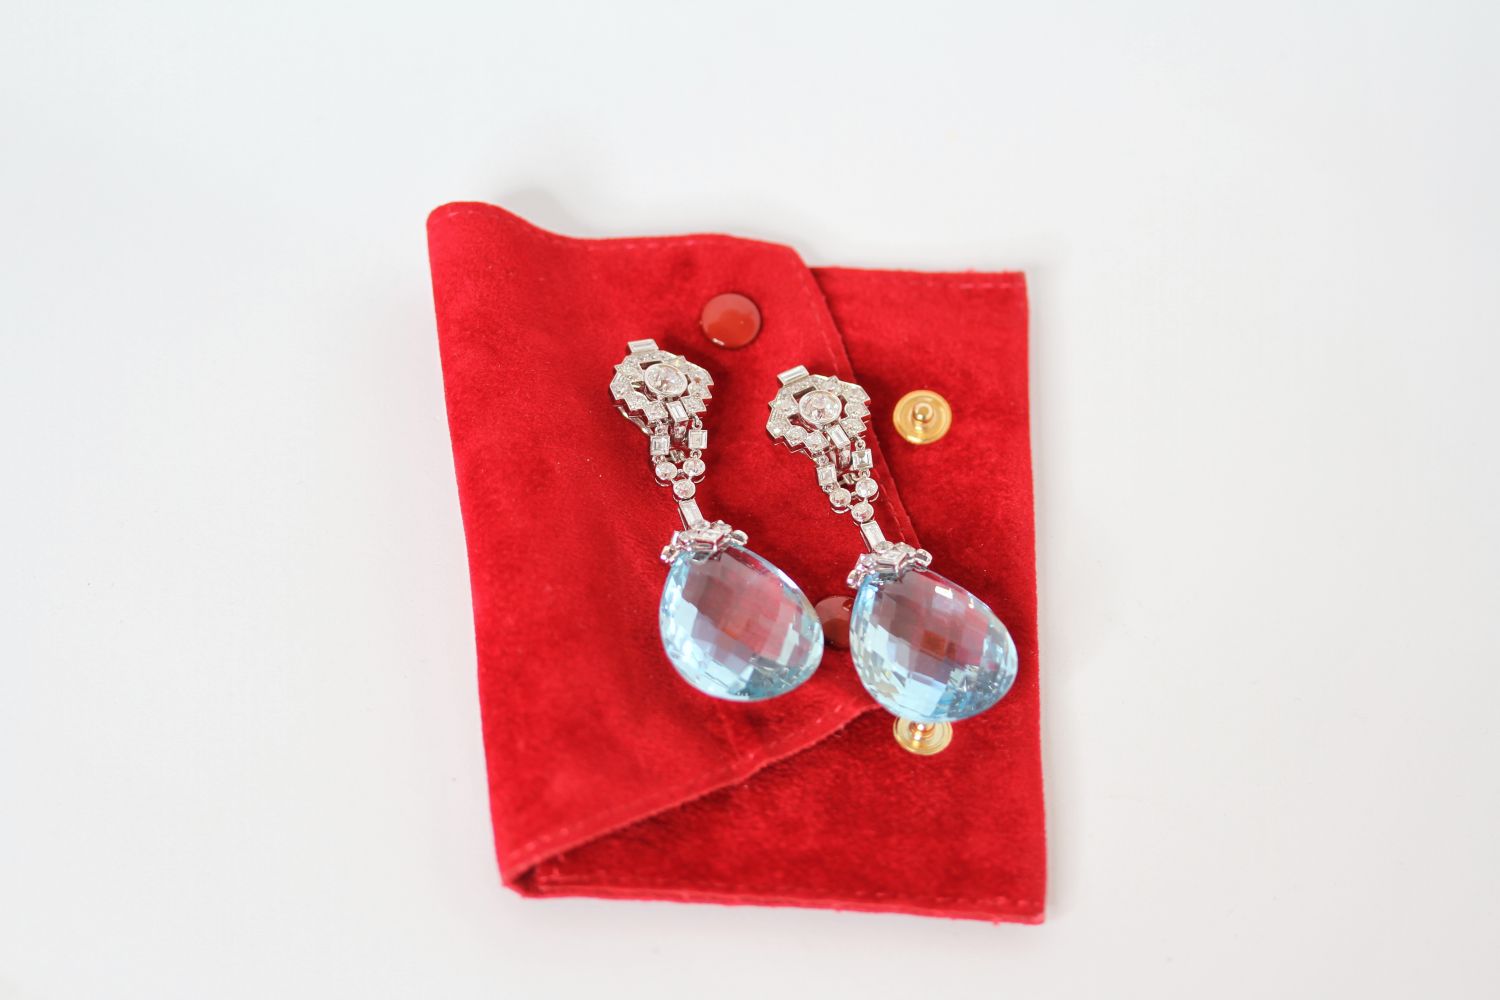 CARTIER AQUAMARINE DROP EARRINGS, articulated drop earrings, briolette-cut aquamarine drops - Image 2 of 3